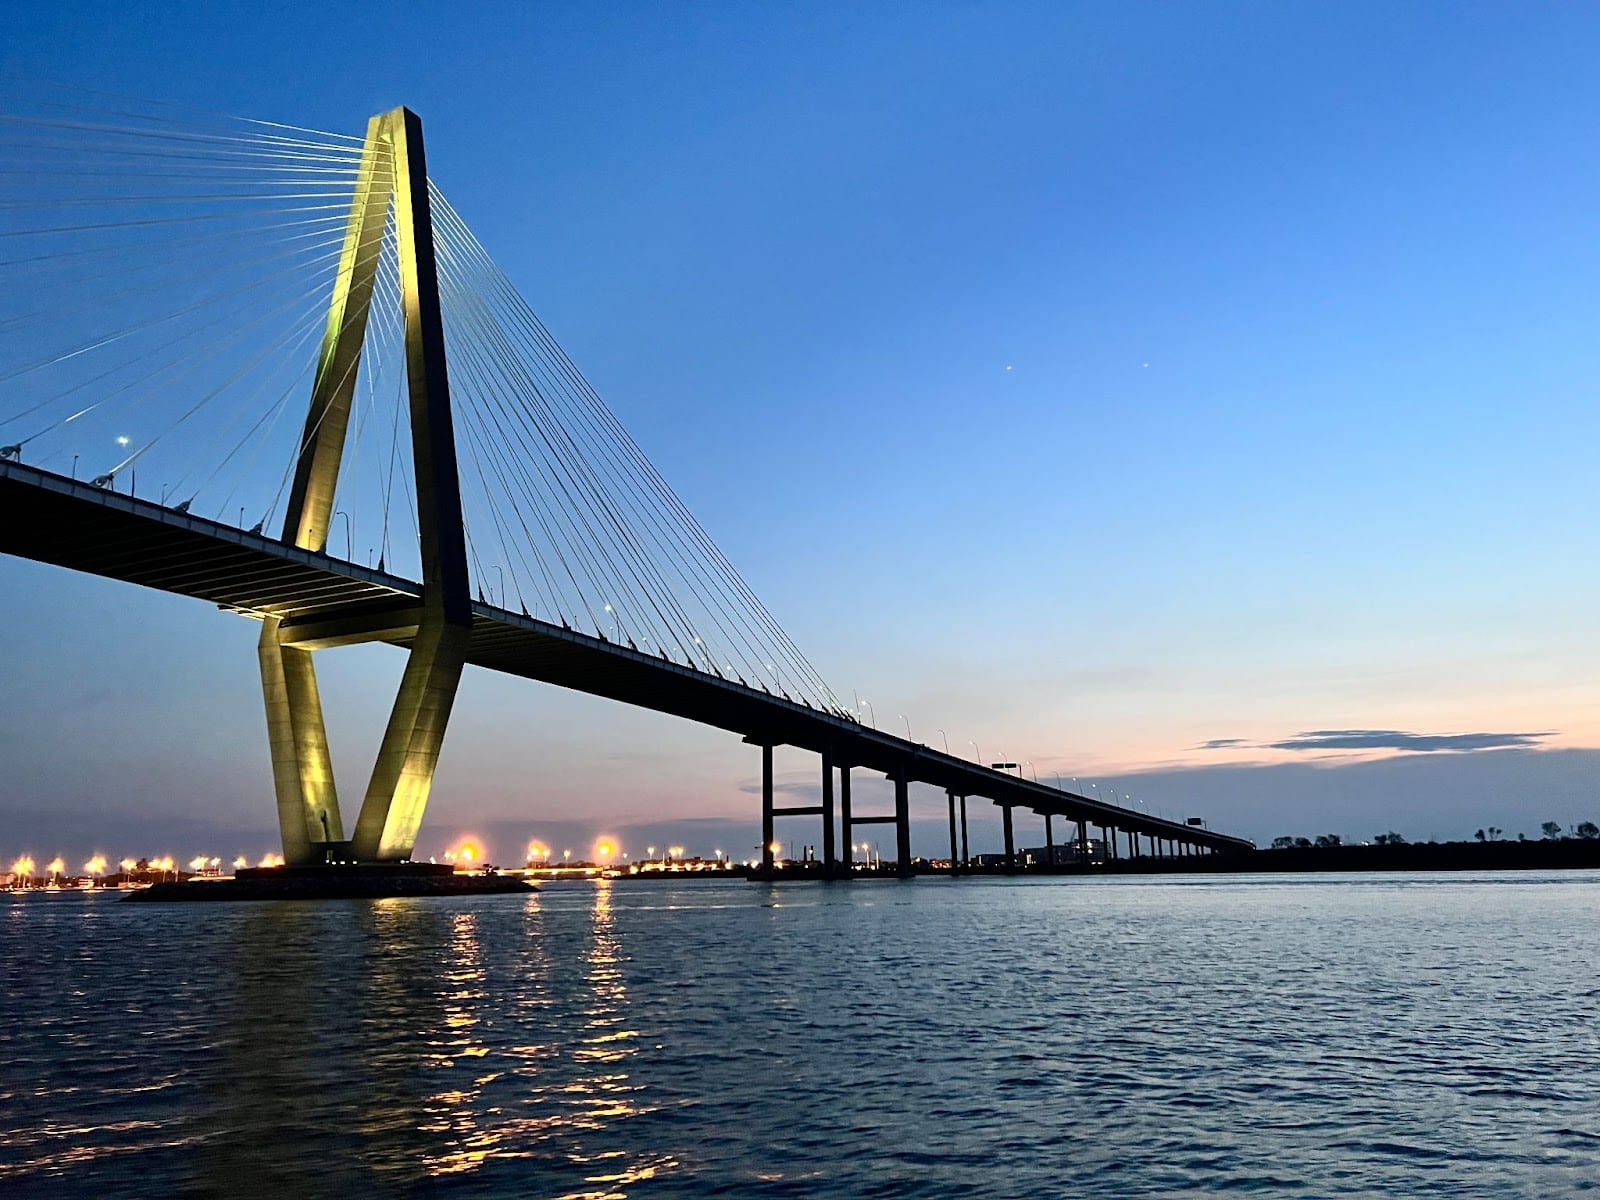 Un moderno puente colgante iluminado sobre un río al atardecer.